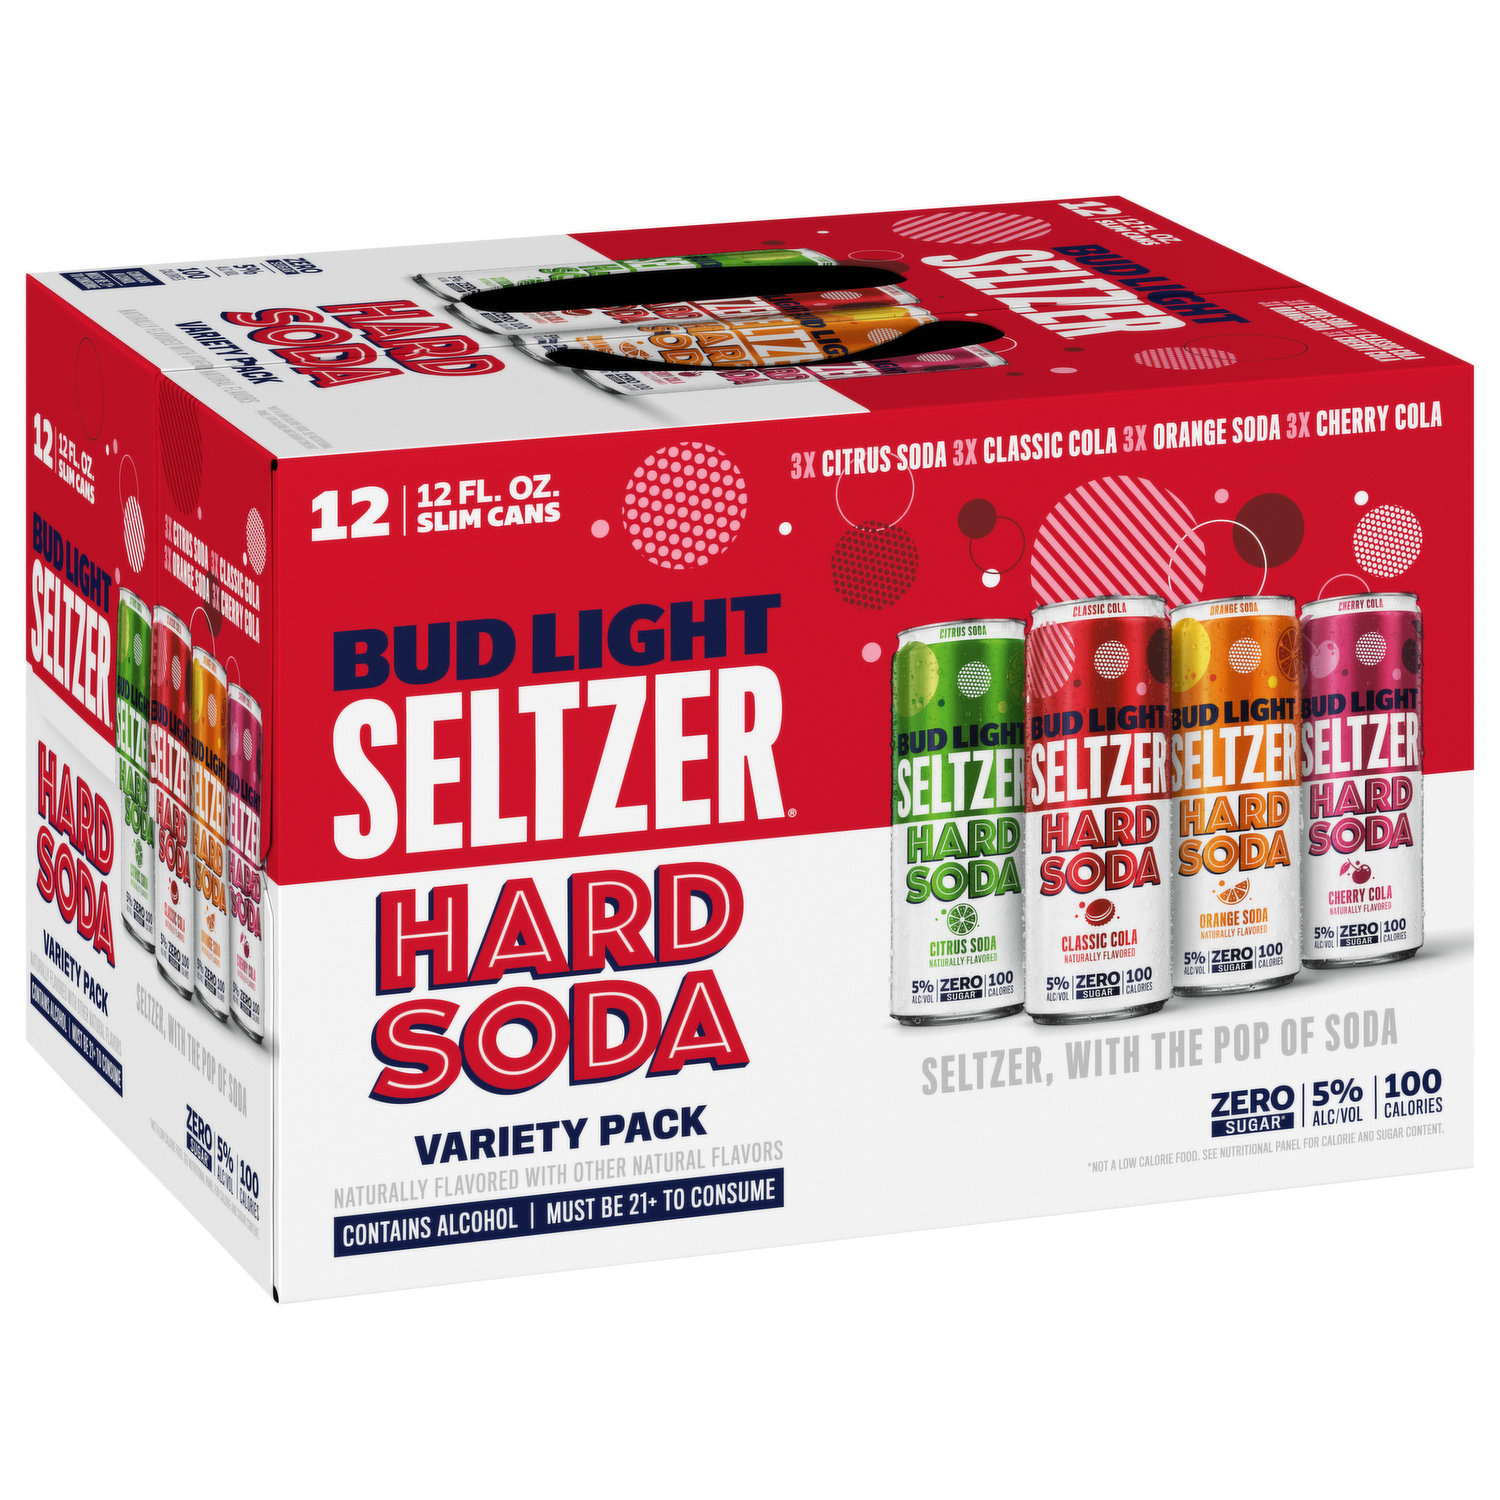 Bud Light Seltzer Hard Soda Variety